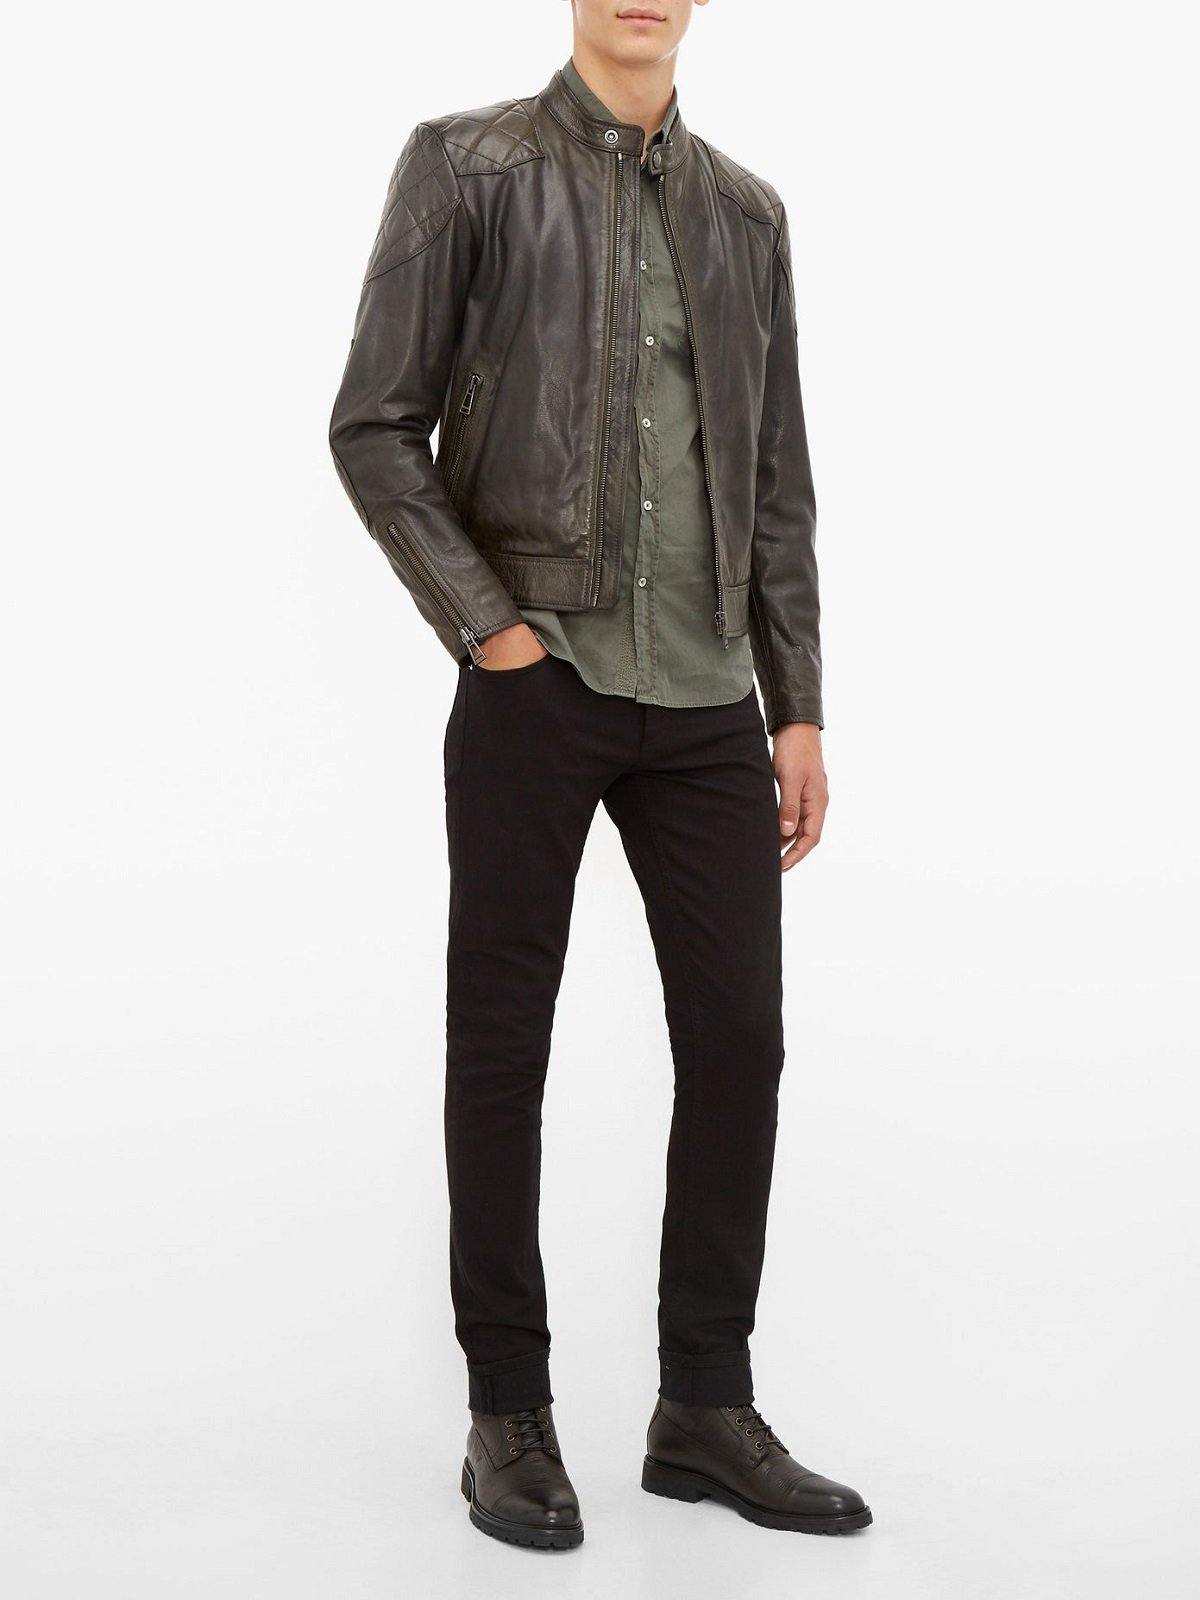 Men Stylish Brown Leather Jacket - Wiseleather